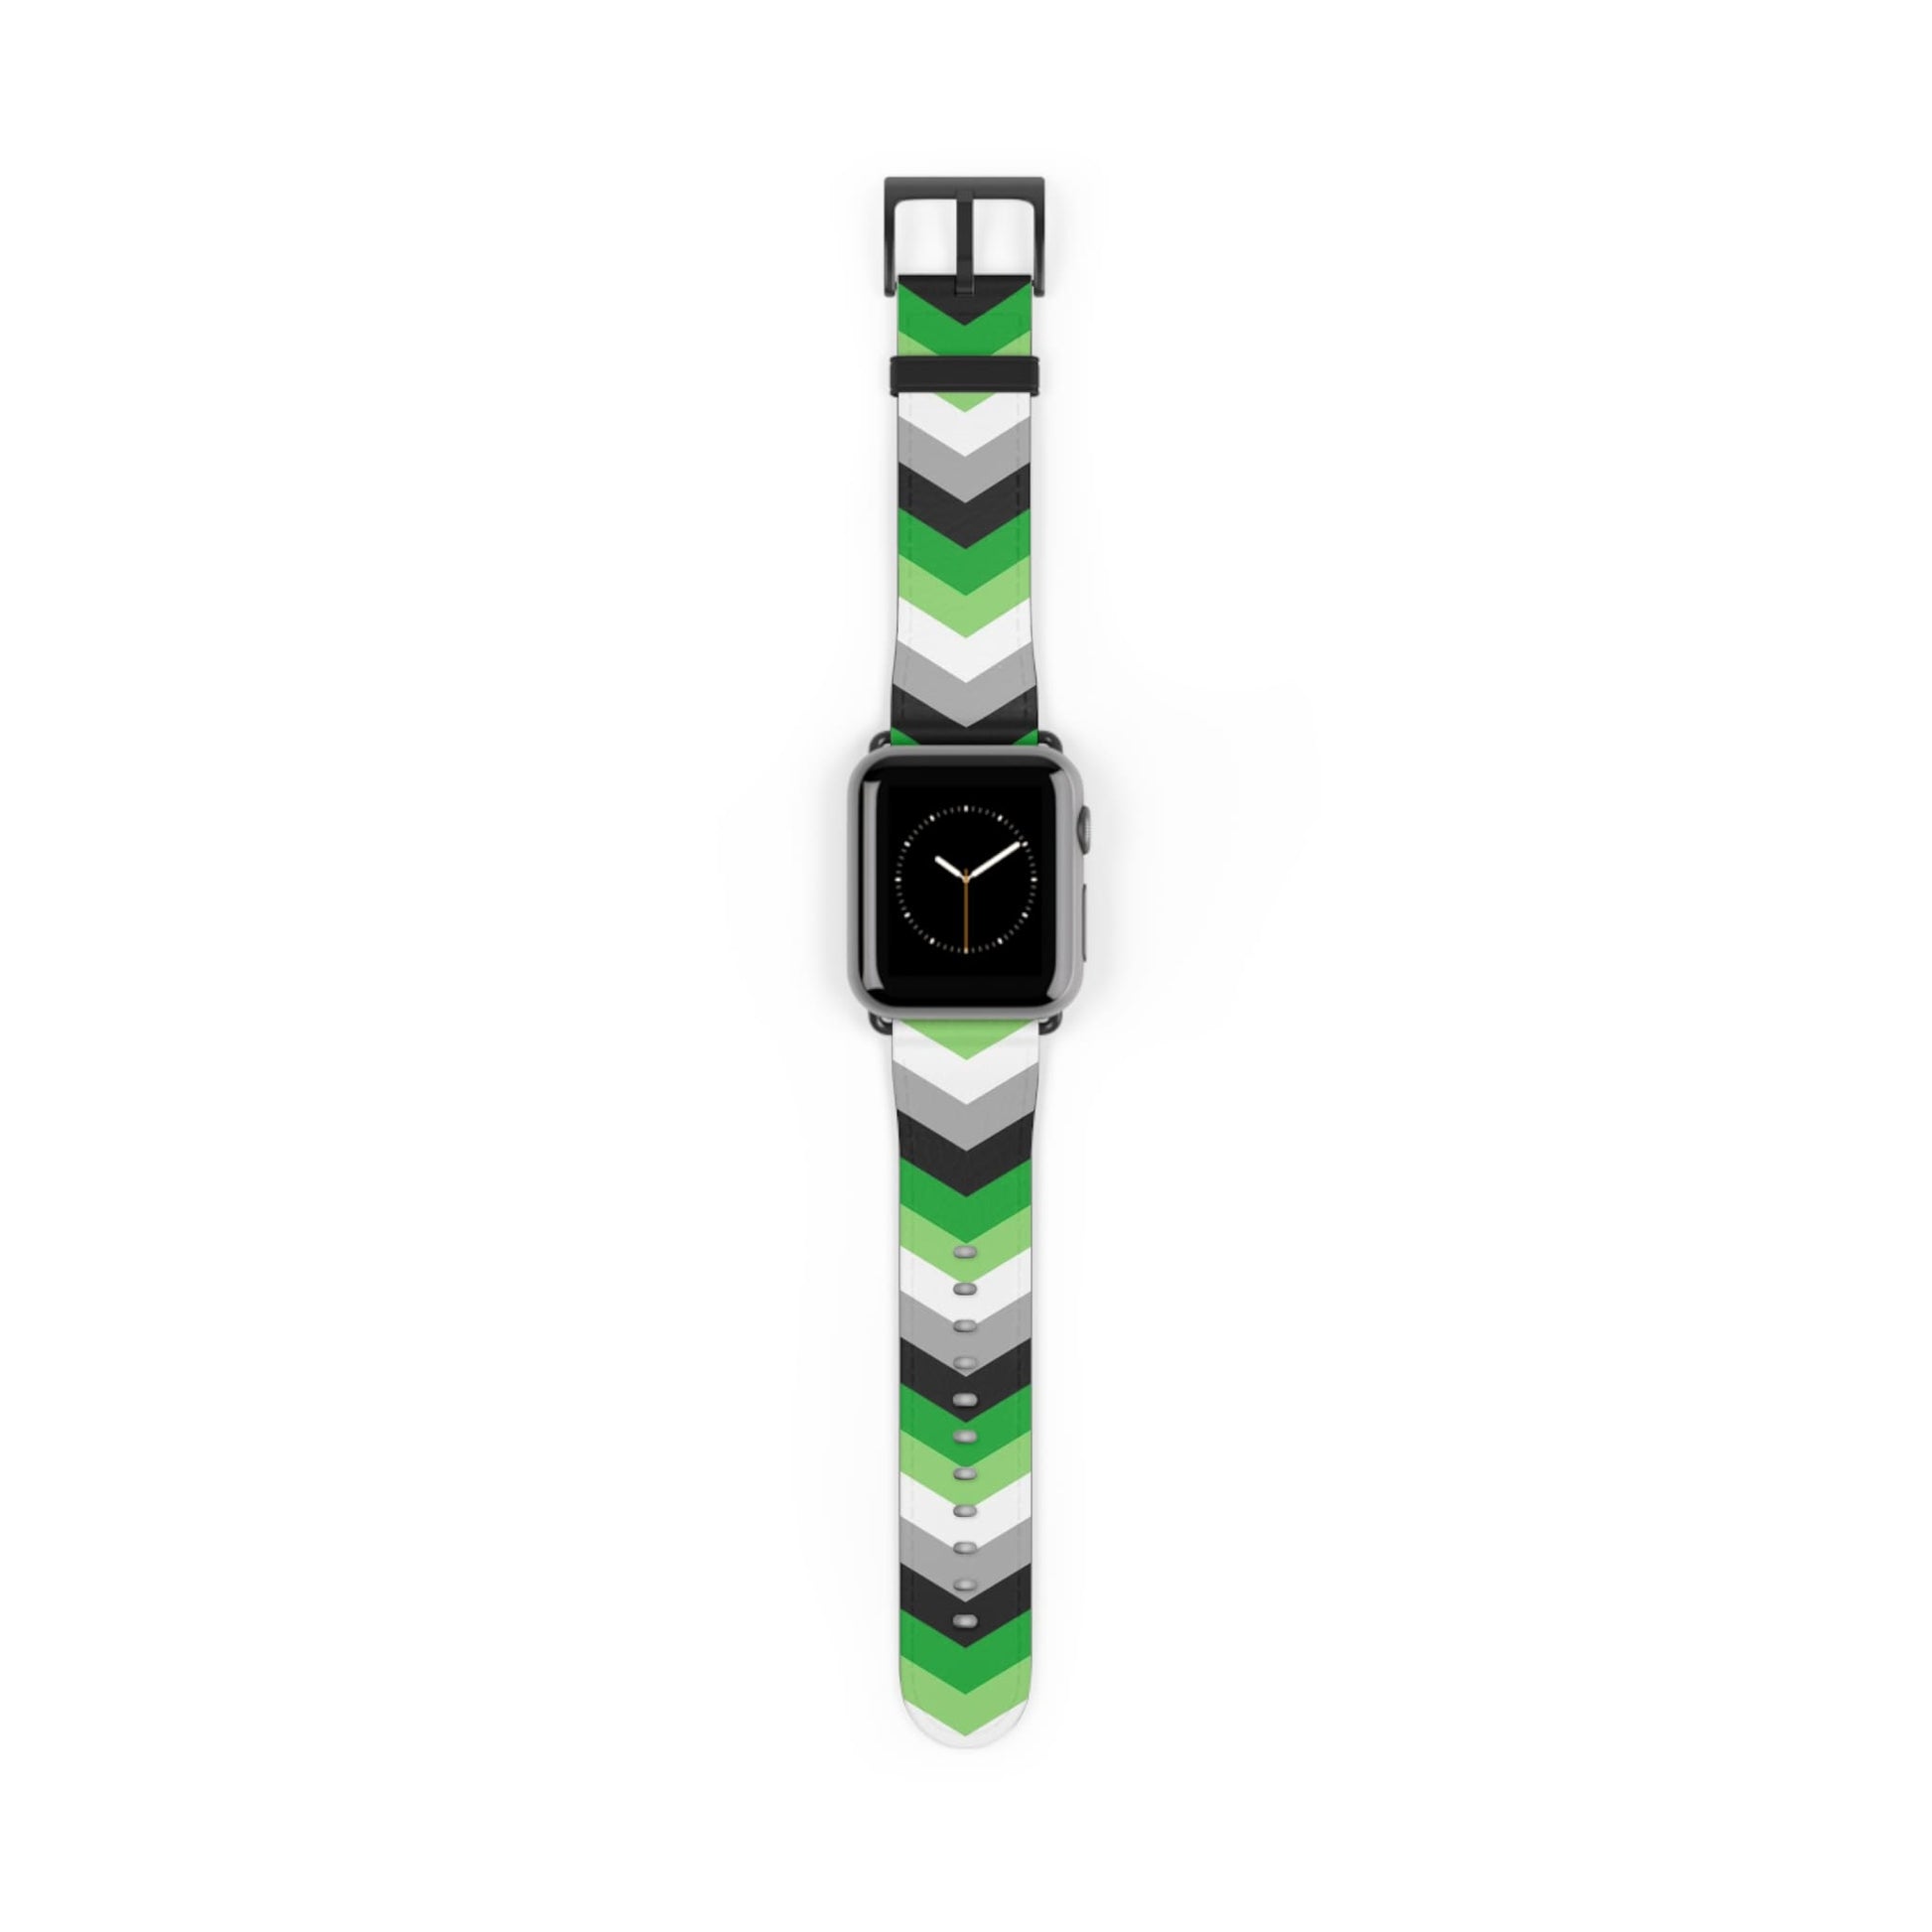 aromantic apple watch band, discreet chevron pattern, black